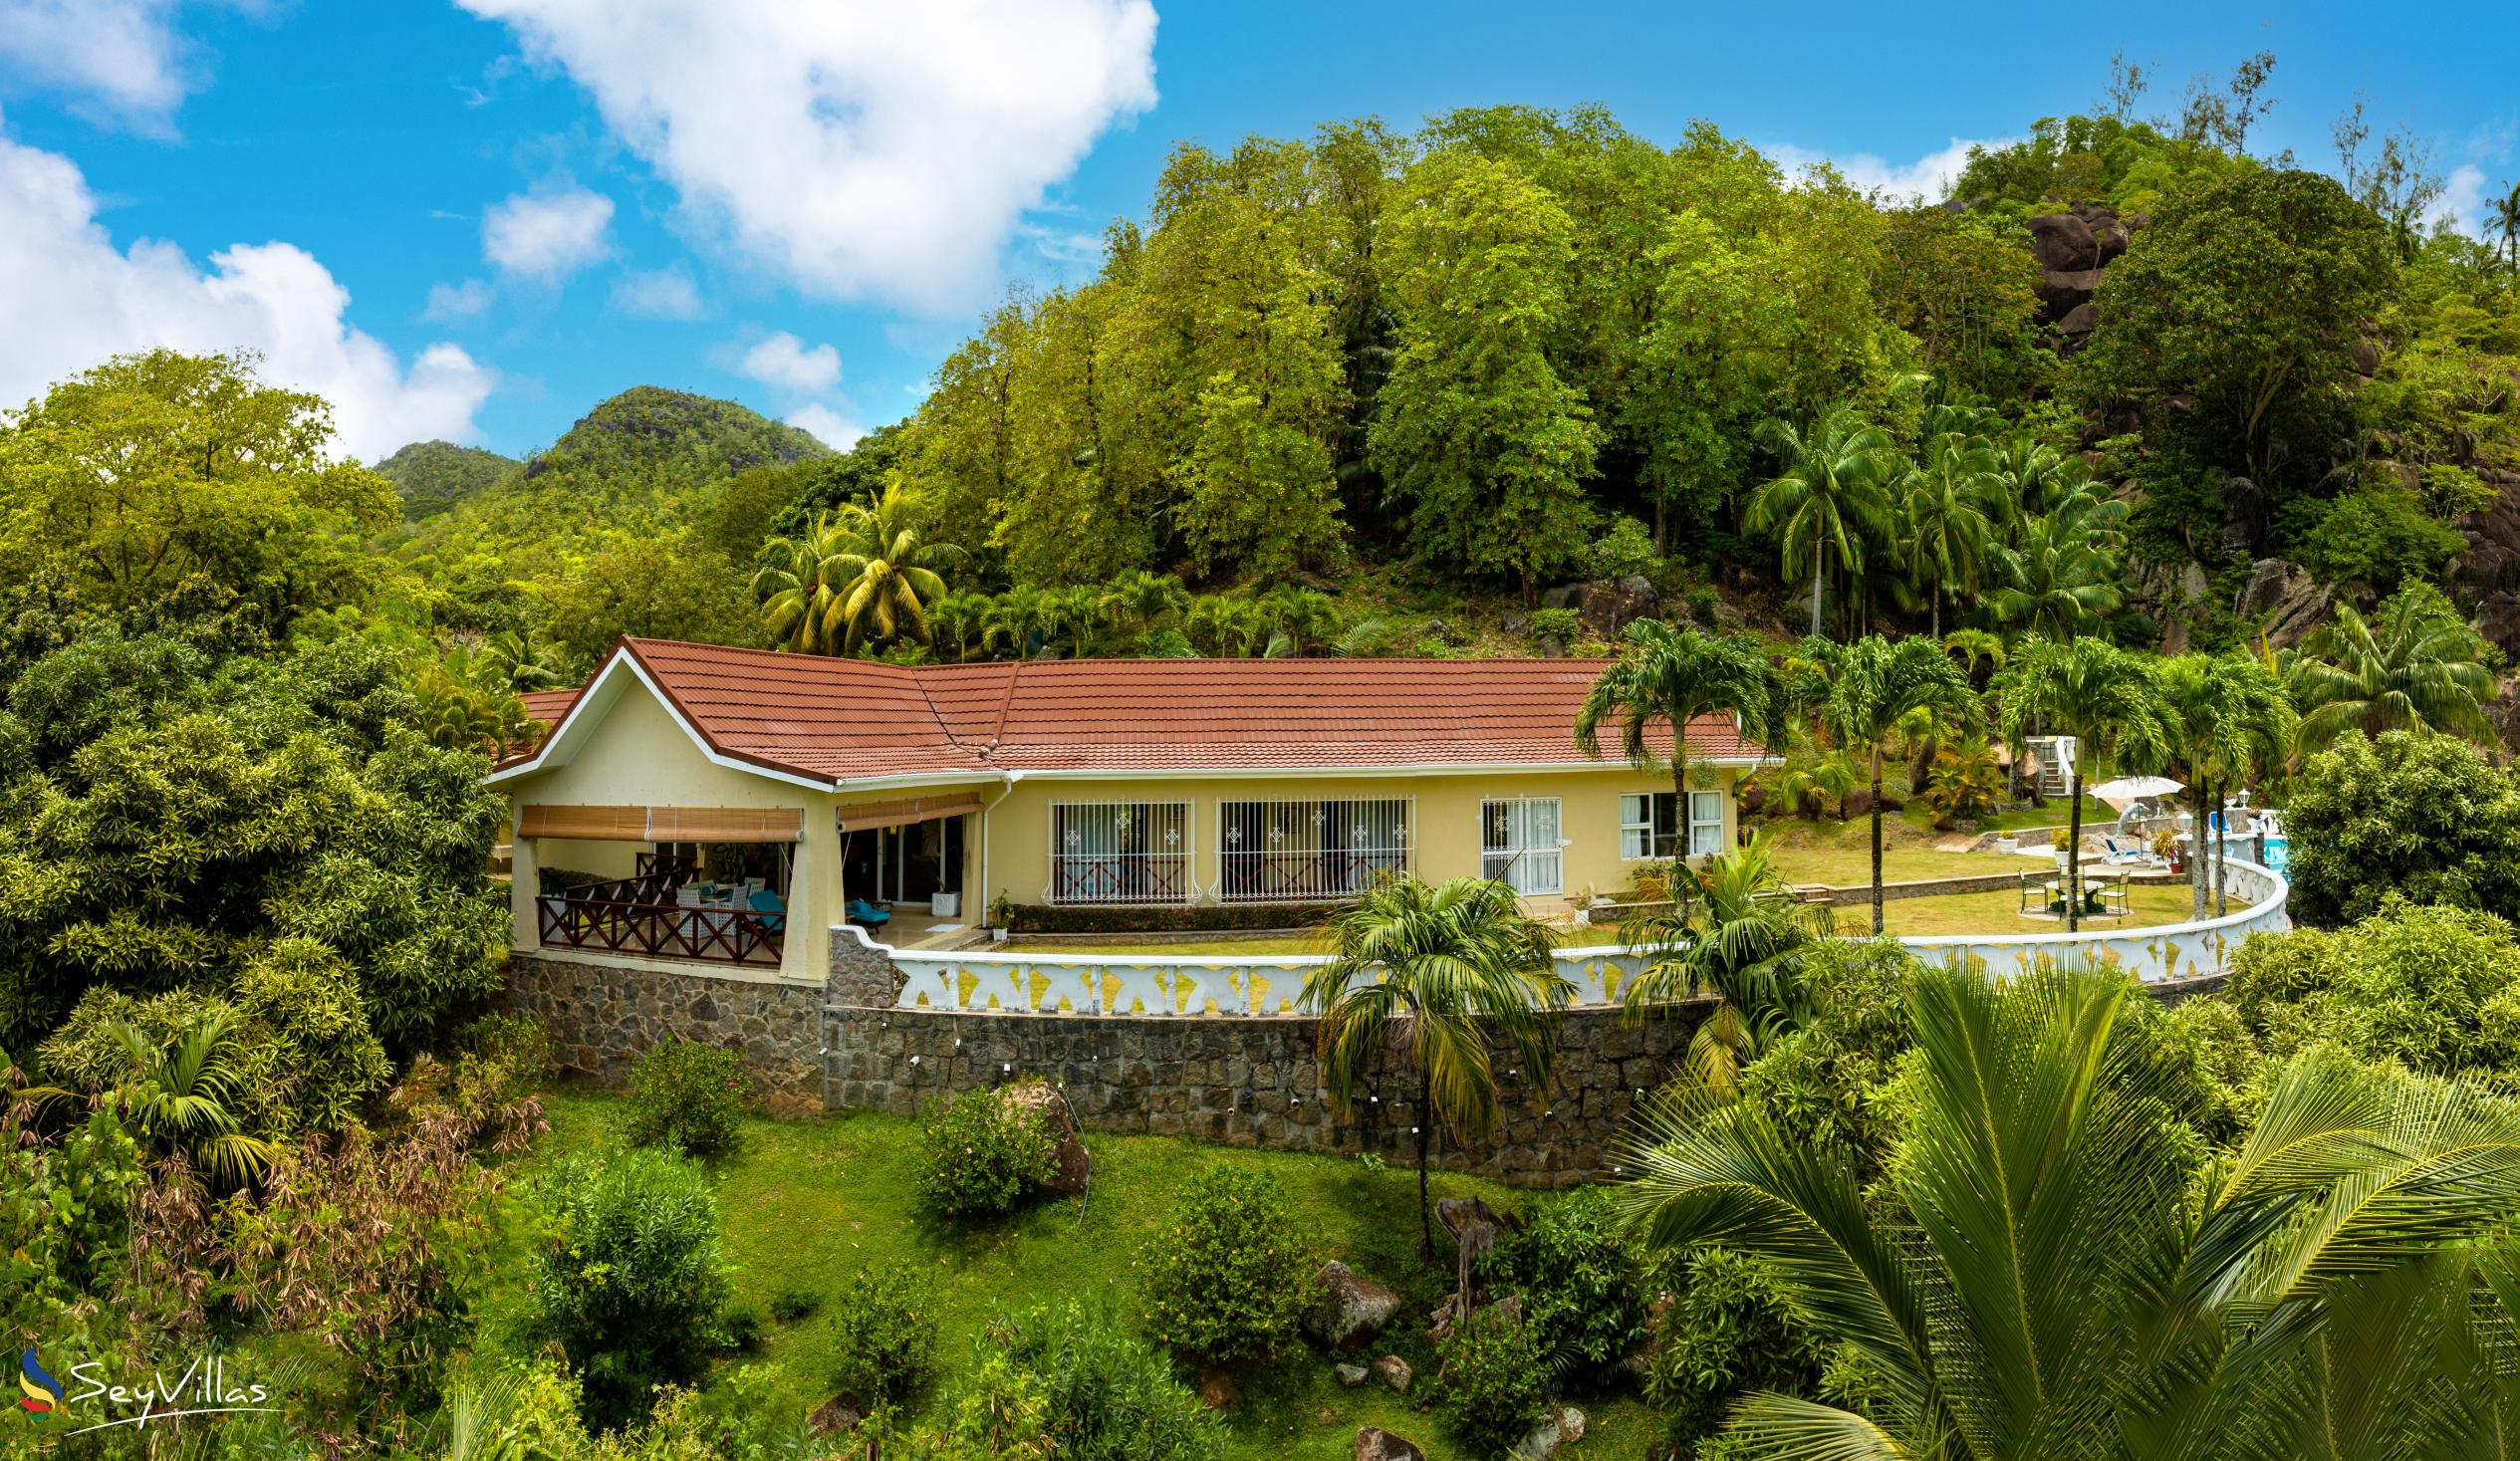 Photo 4: Villa Gazebo - Outdoor area - Mahé (Seychelles)